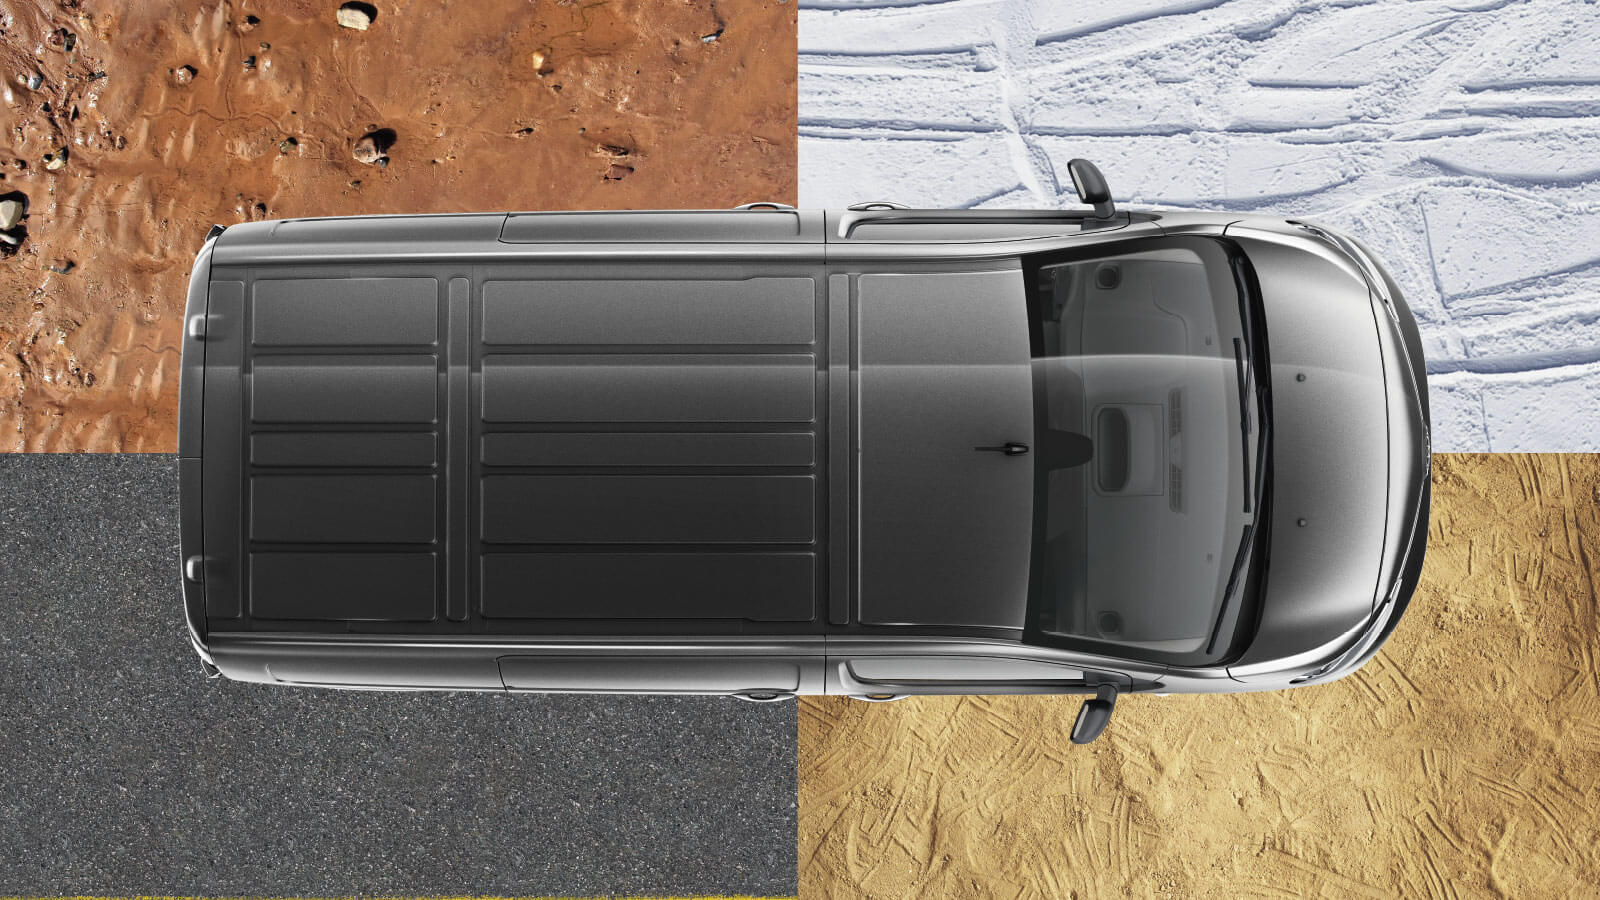 Vista aerea del Toyota ProAce sobre diferentes texturas de suelo